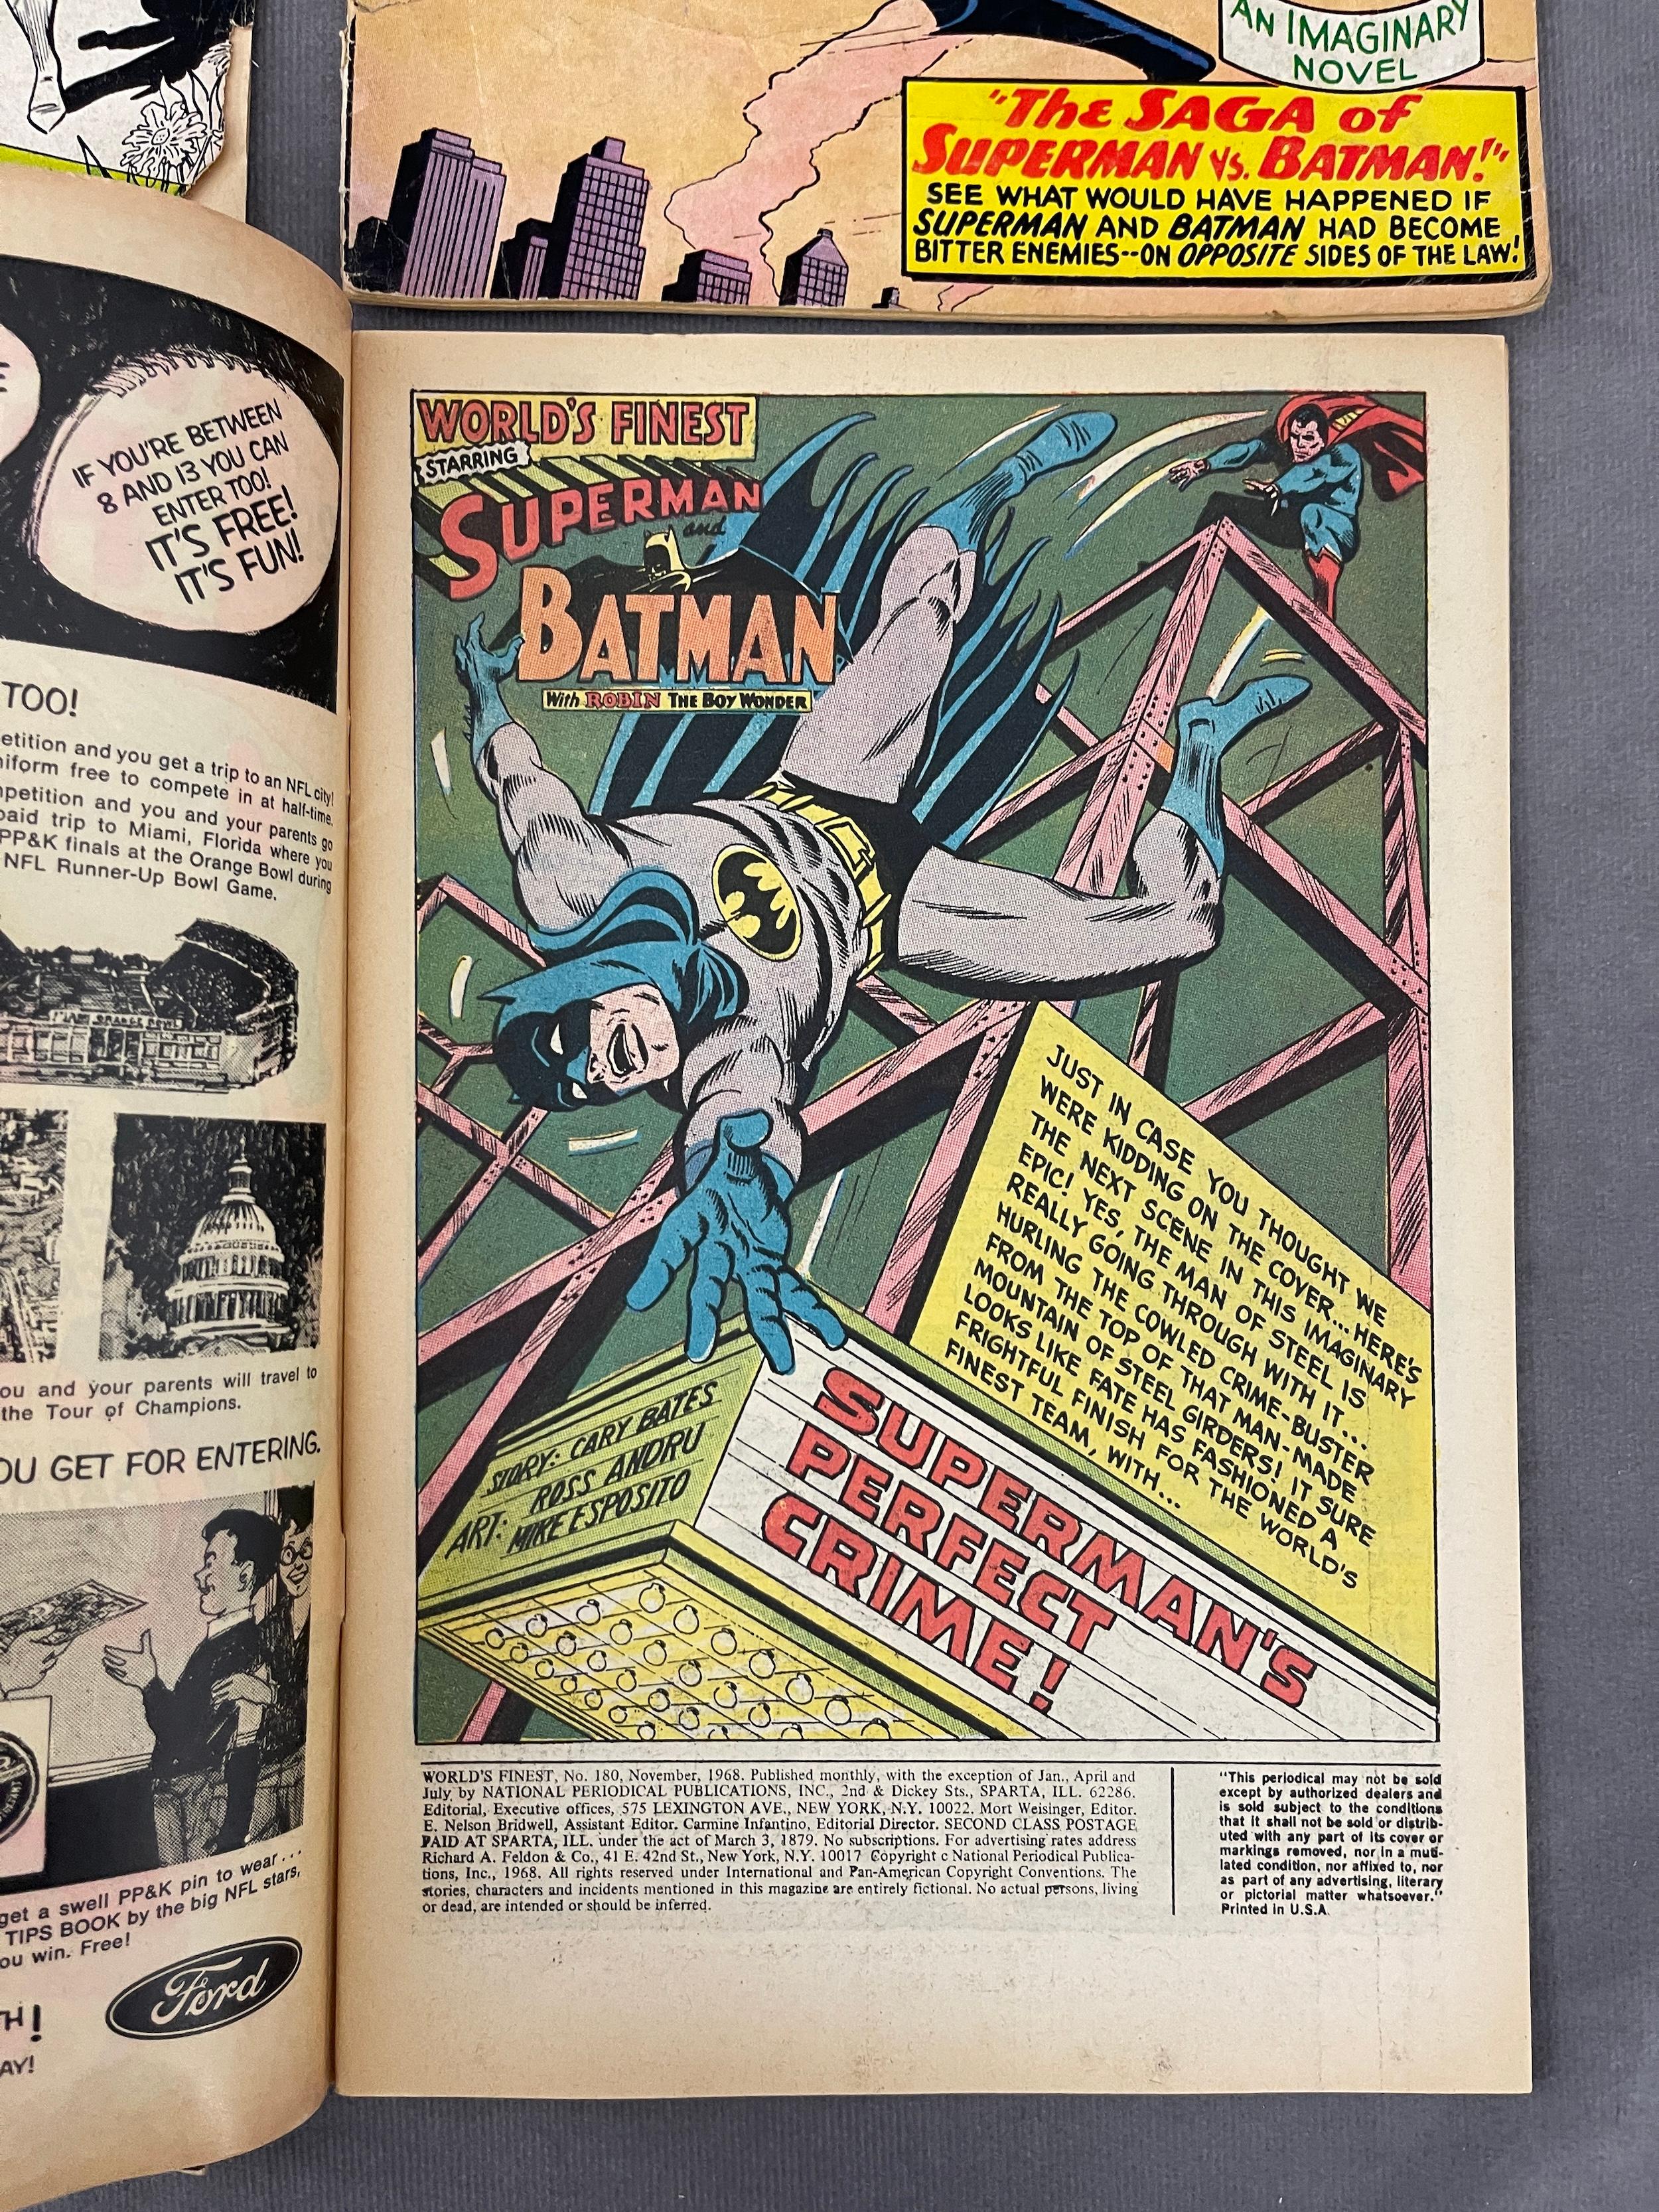 World's Finest Vintage DC Comic Books